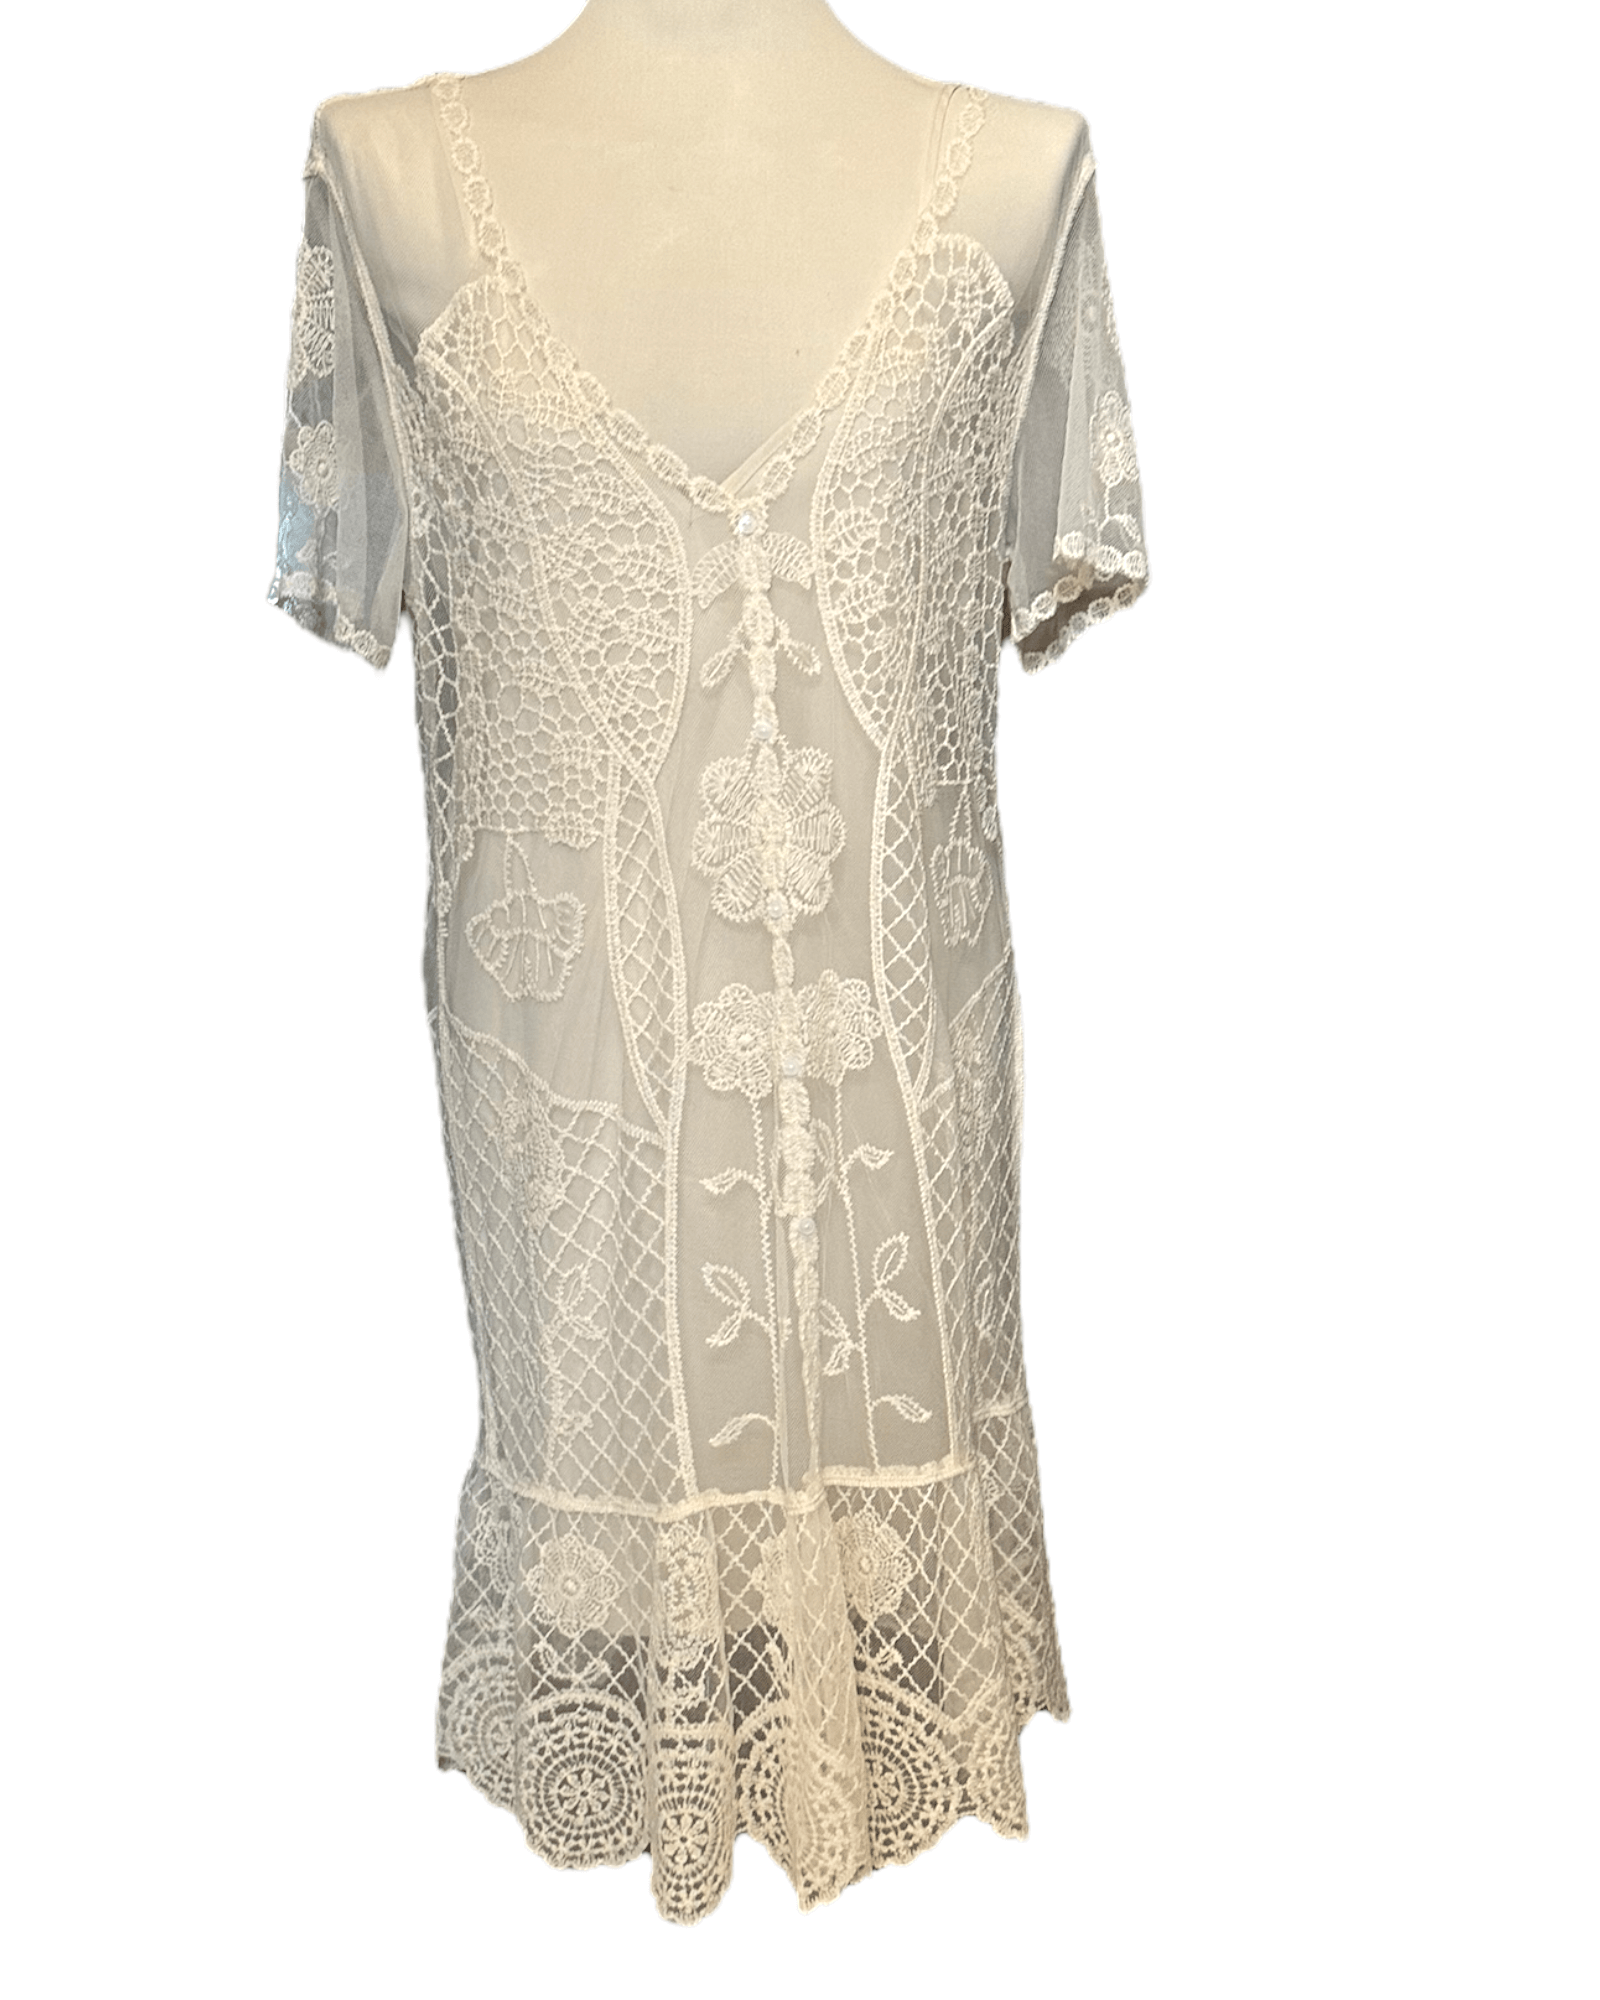 Bright Spring ZARA ivory lace cottage dress